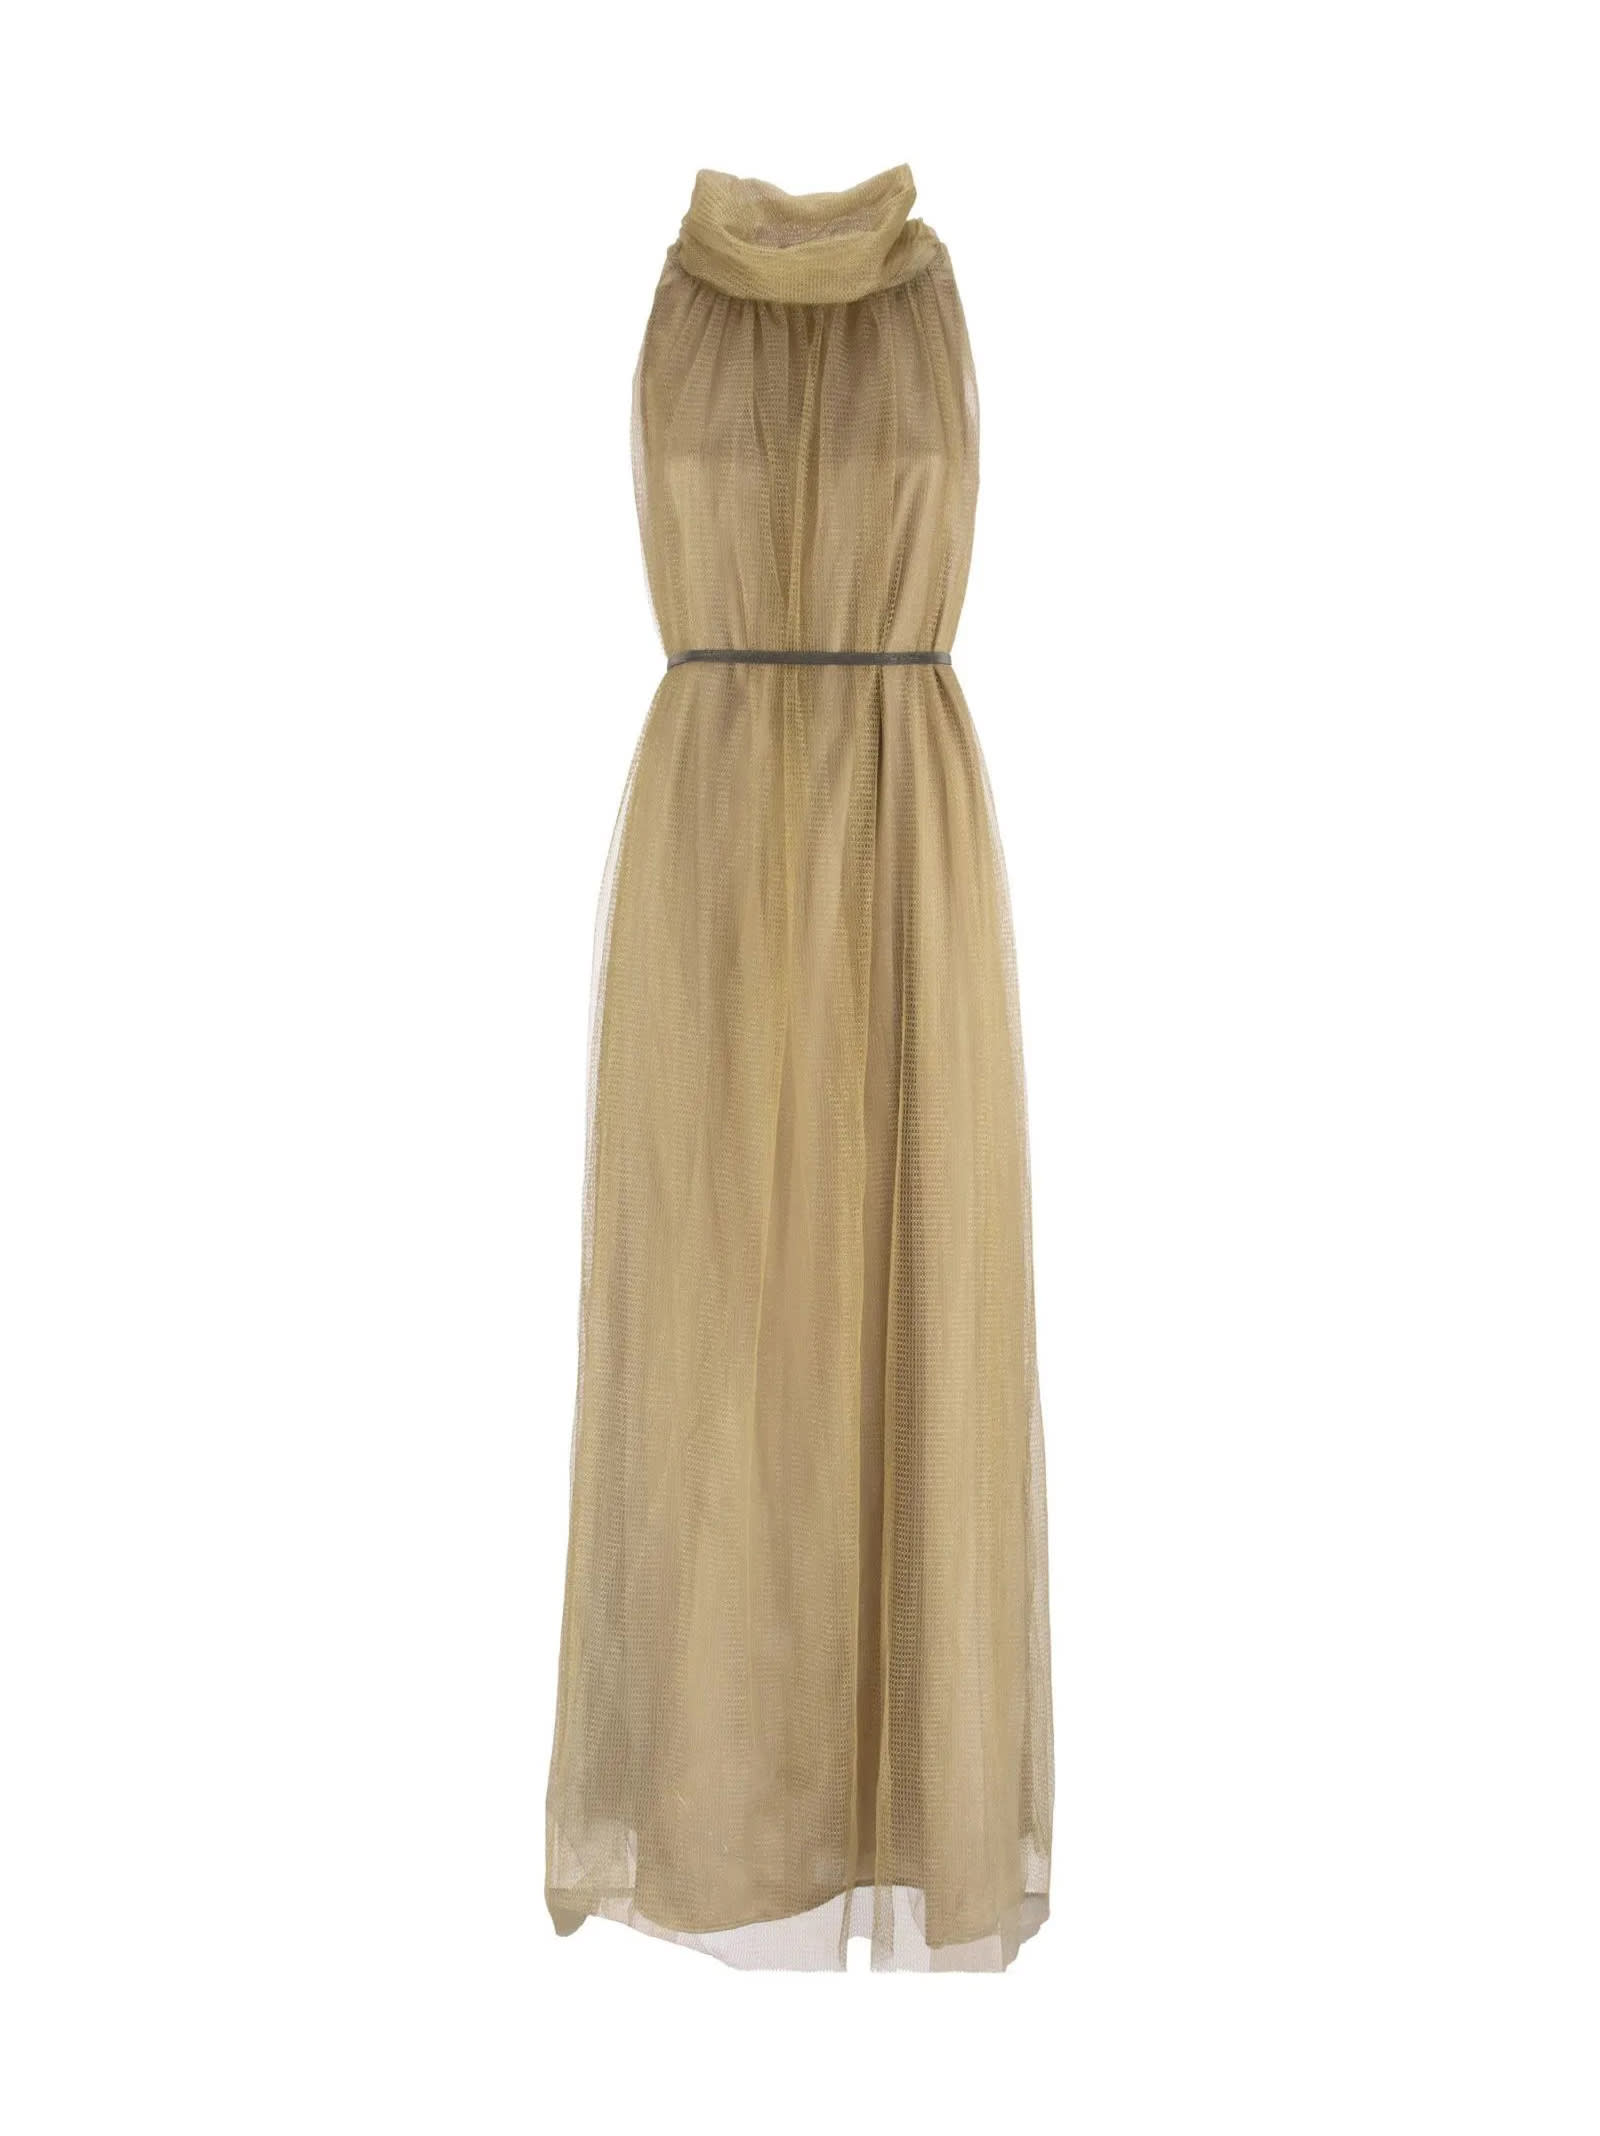 Fabiana Filippi Long Lurex Gold Dress